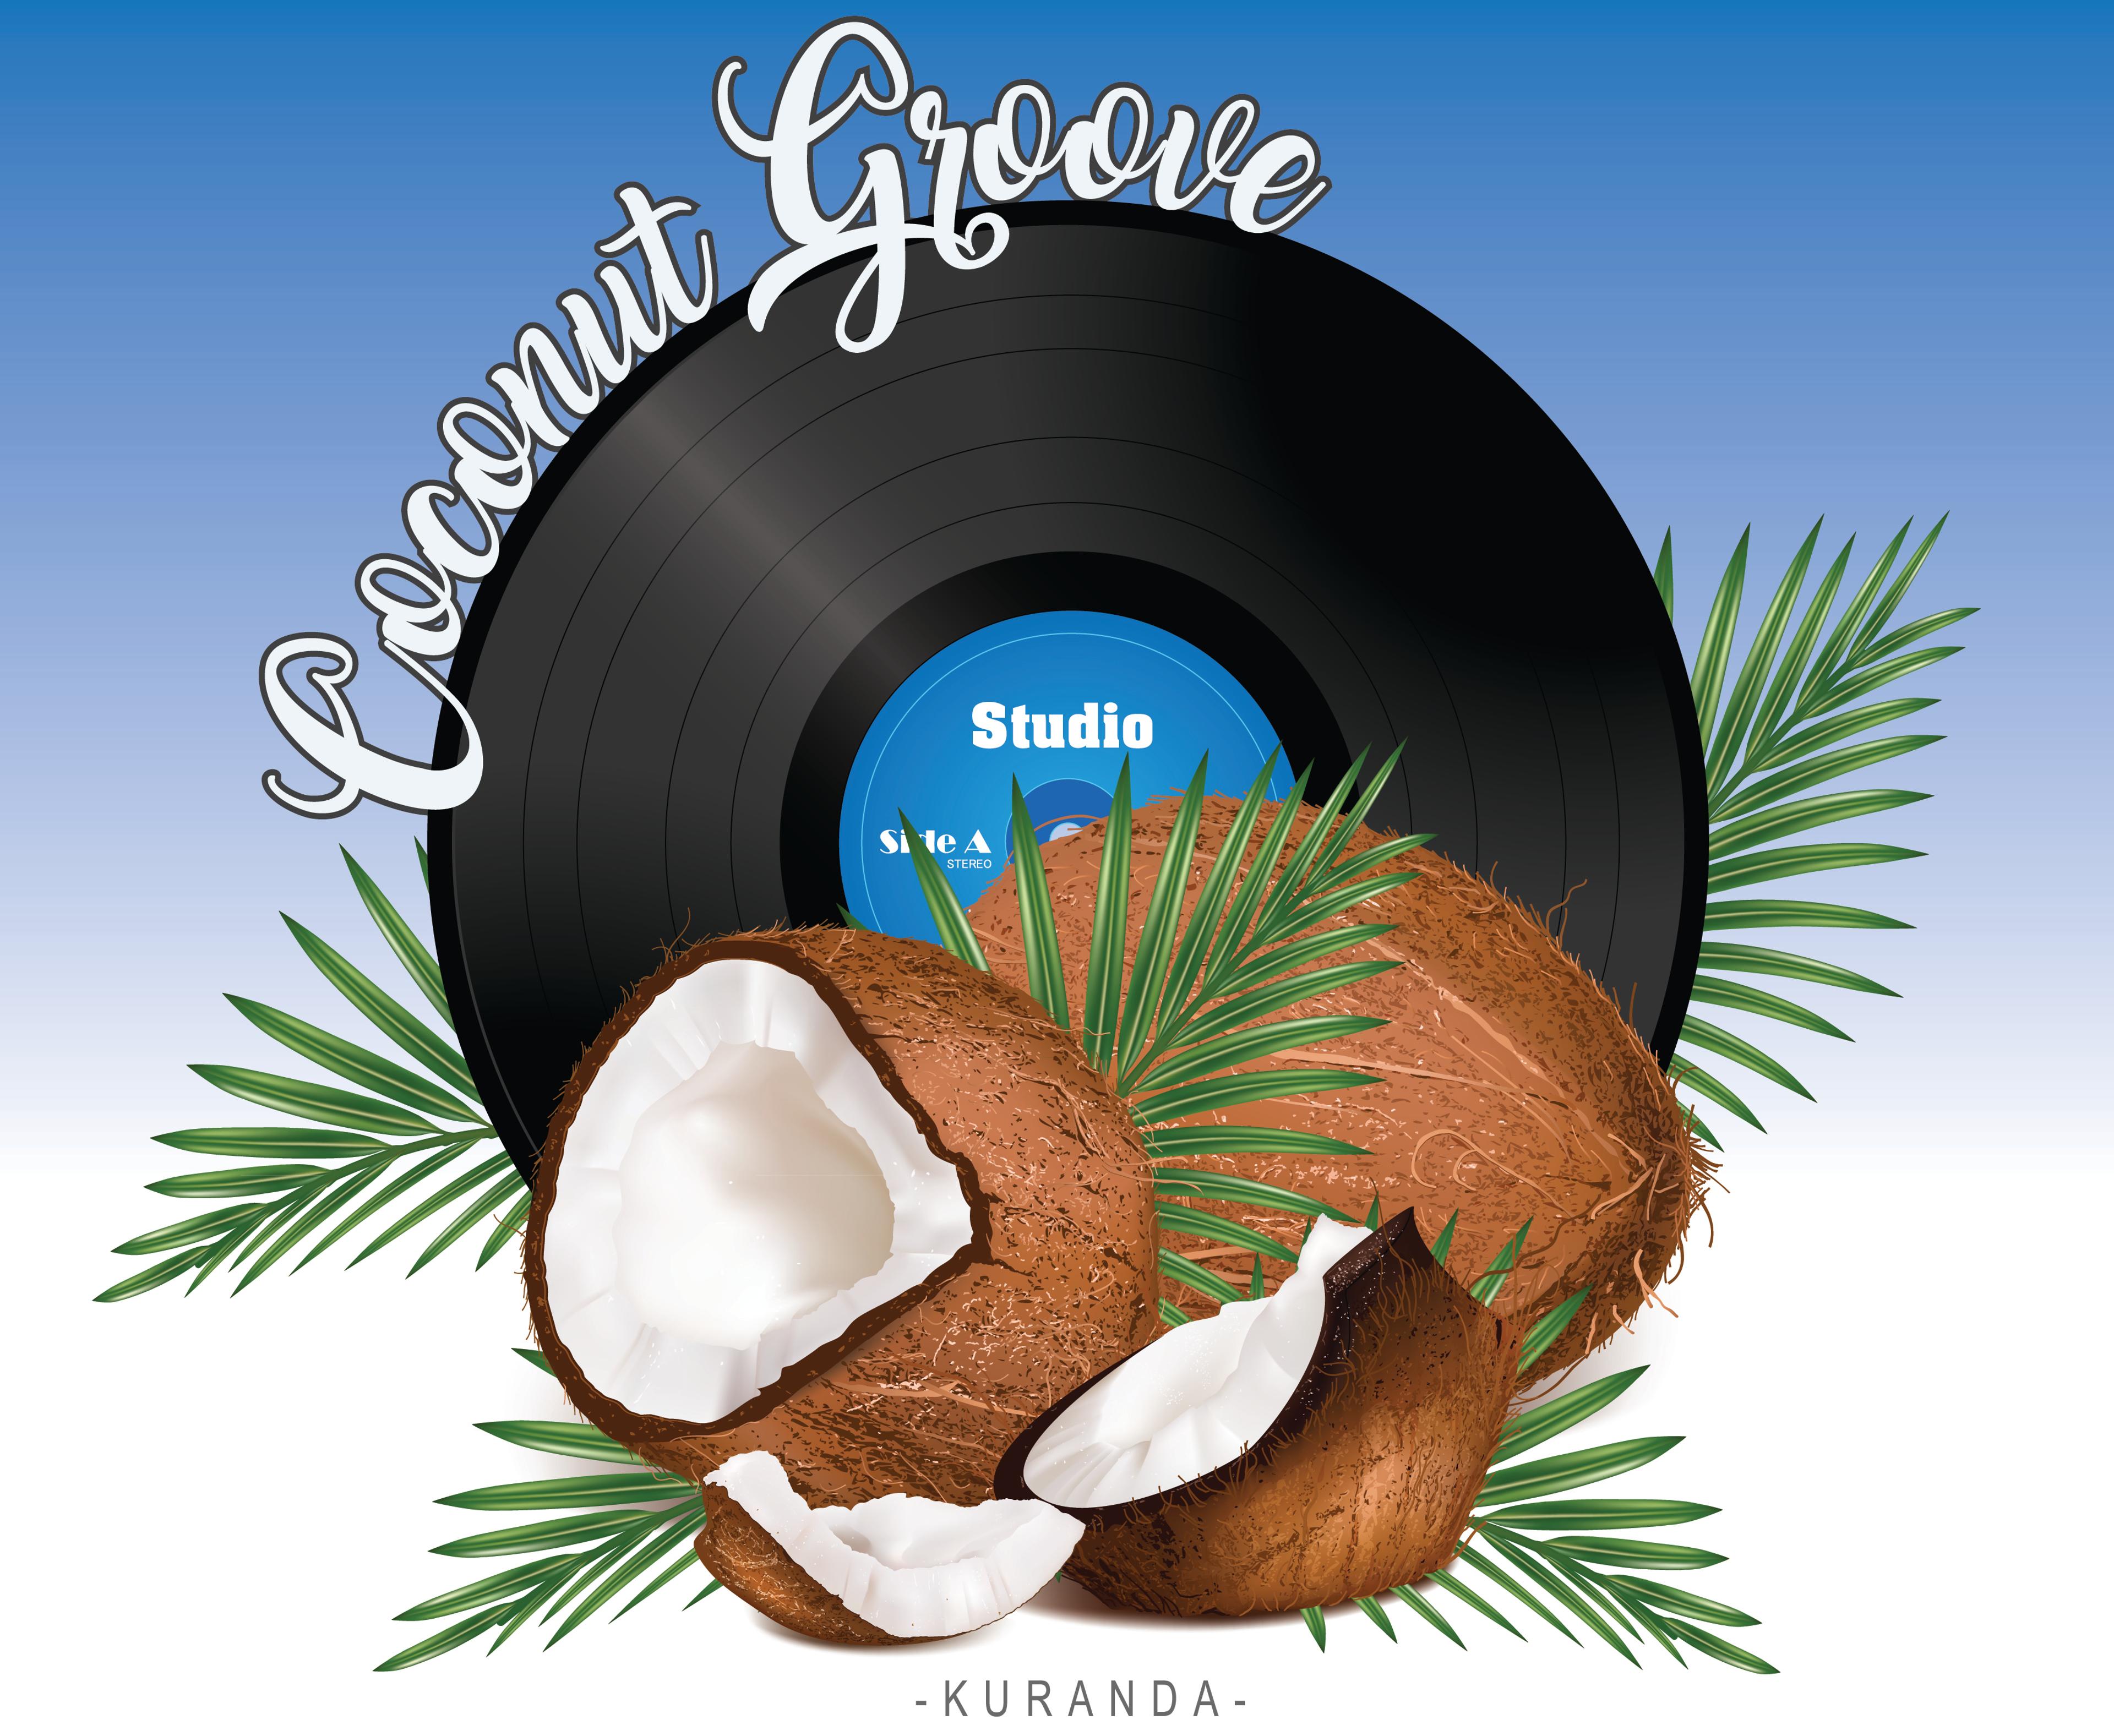 Coconut Groove Studio